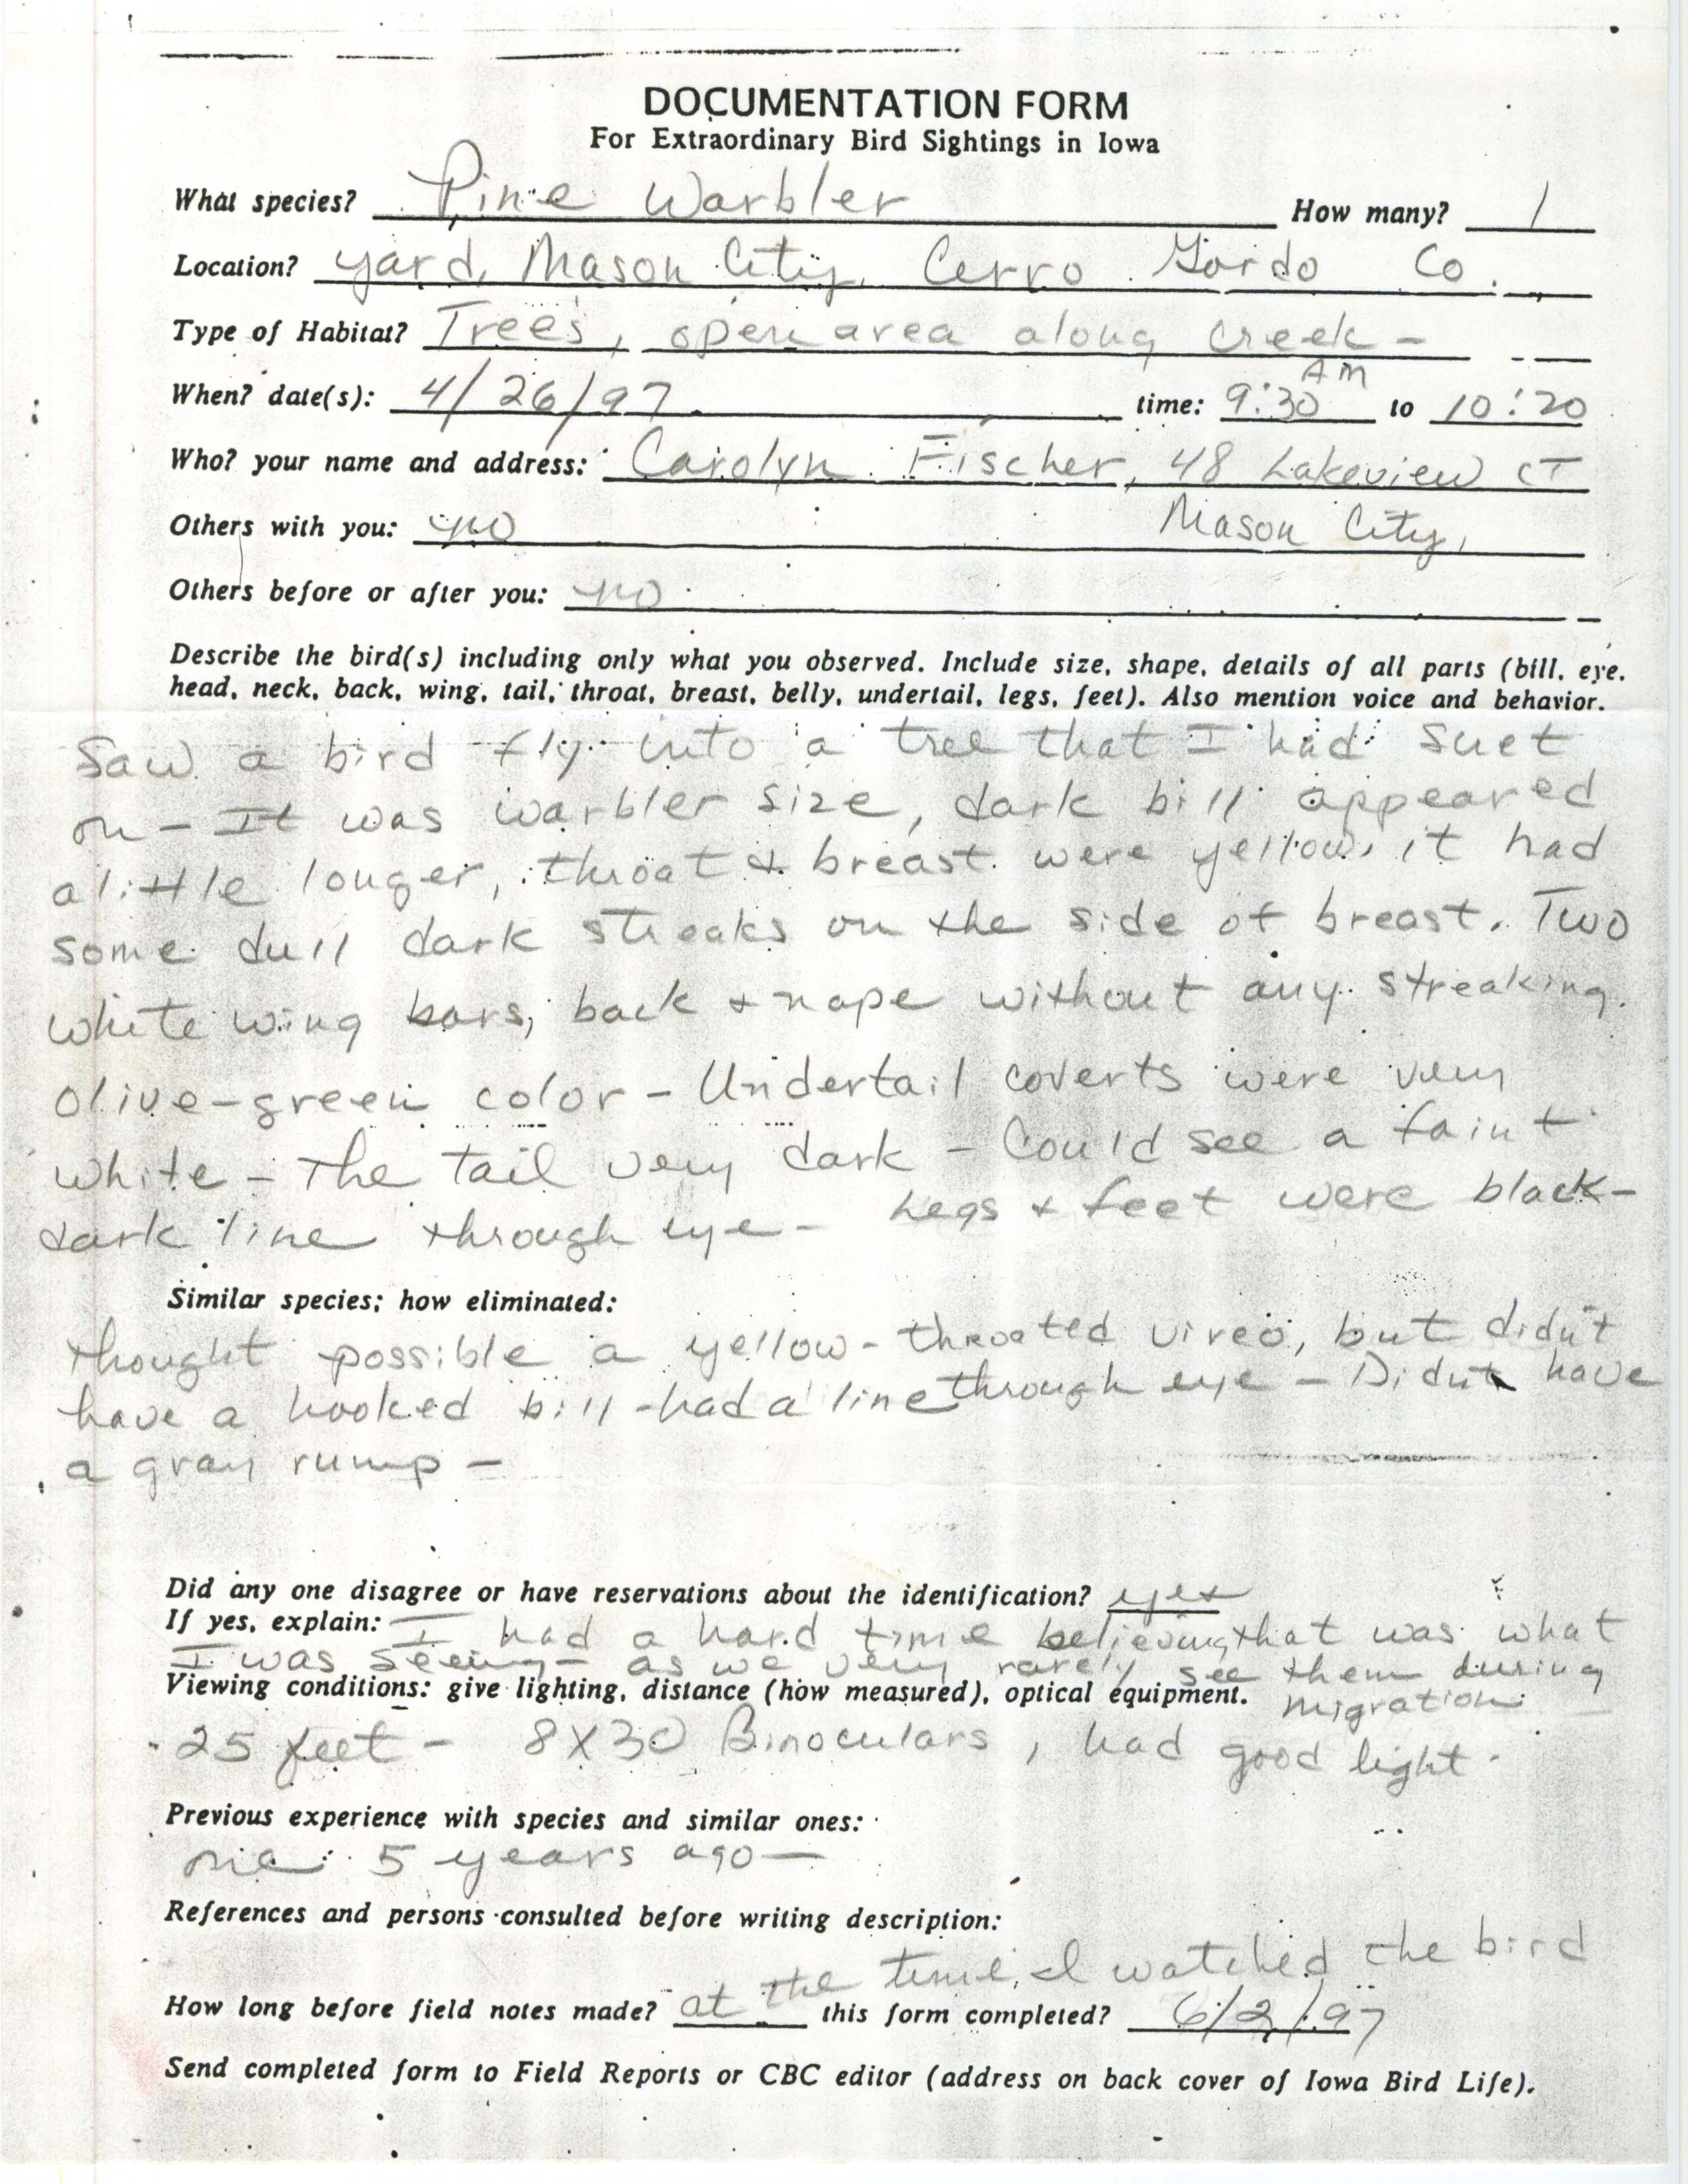 Rare bird documentation form for Pine Warbler at Mason City, 1997